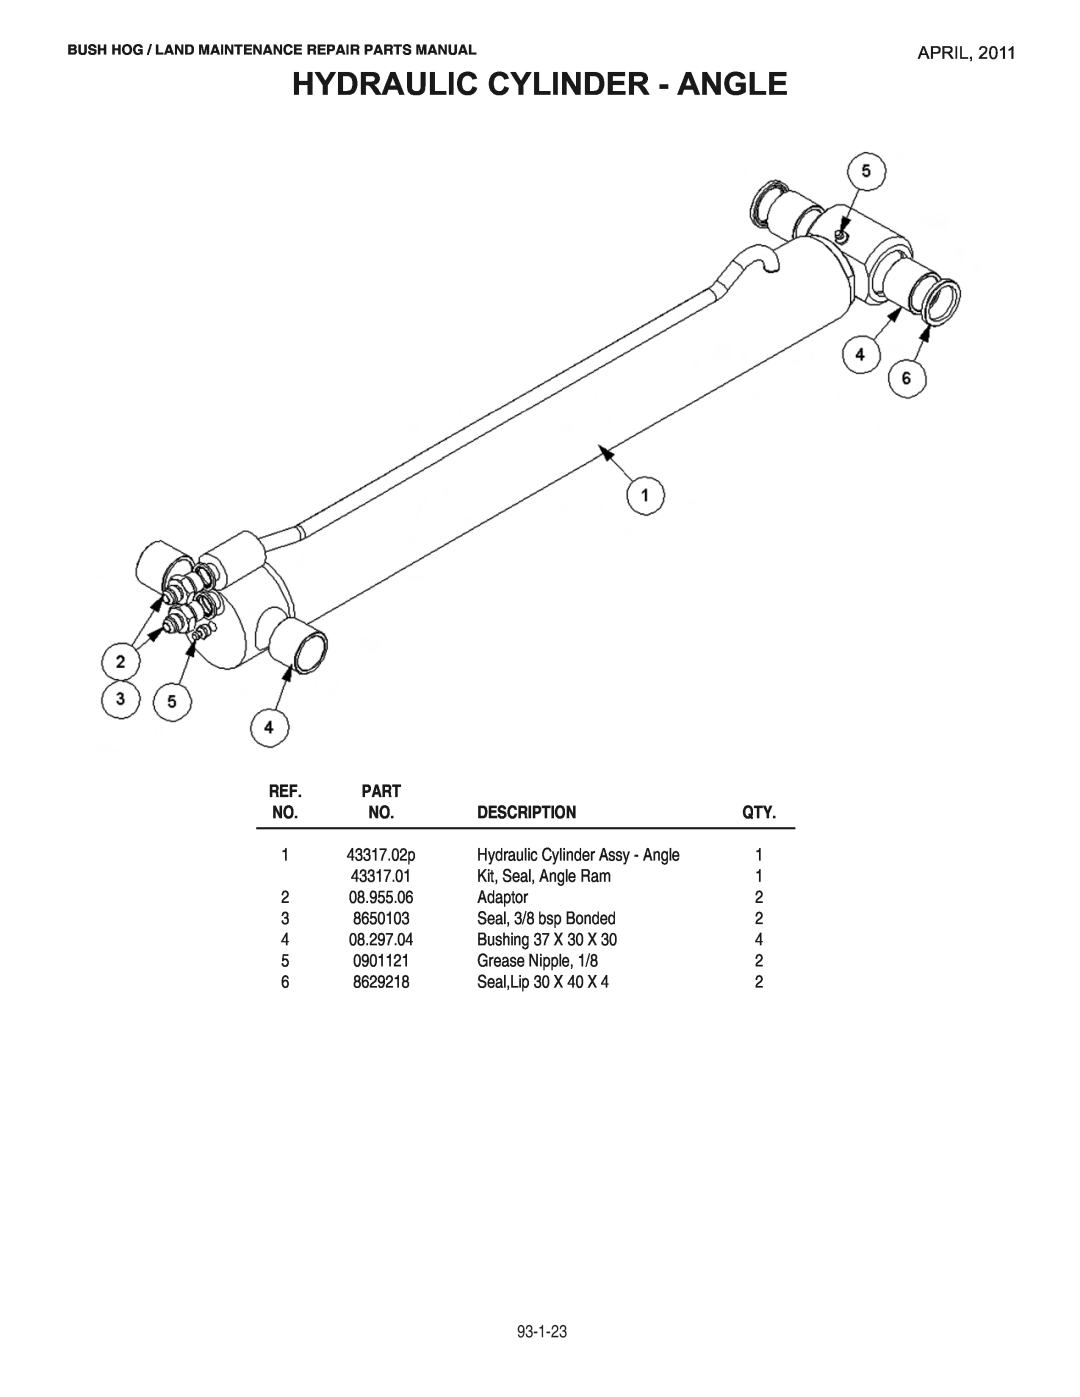 Bush Hog RMB1865E manual Hydraulic Cylinder - Angle, April, Description, Hydraulic Cylinder Assy - Angle, Part 